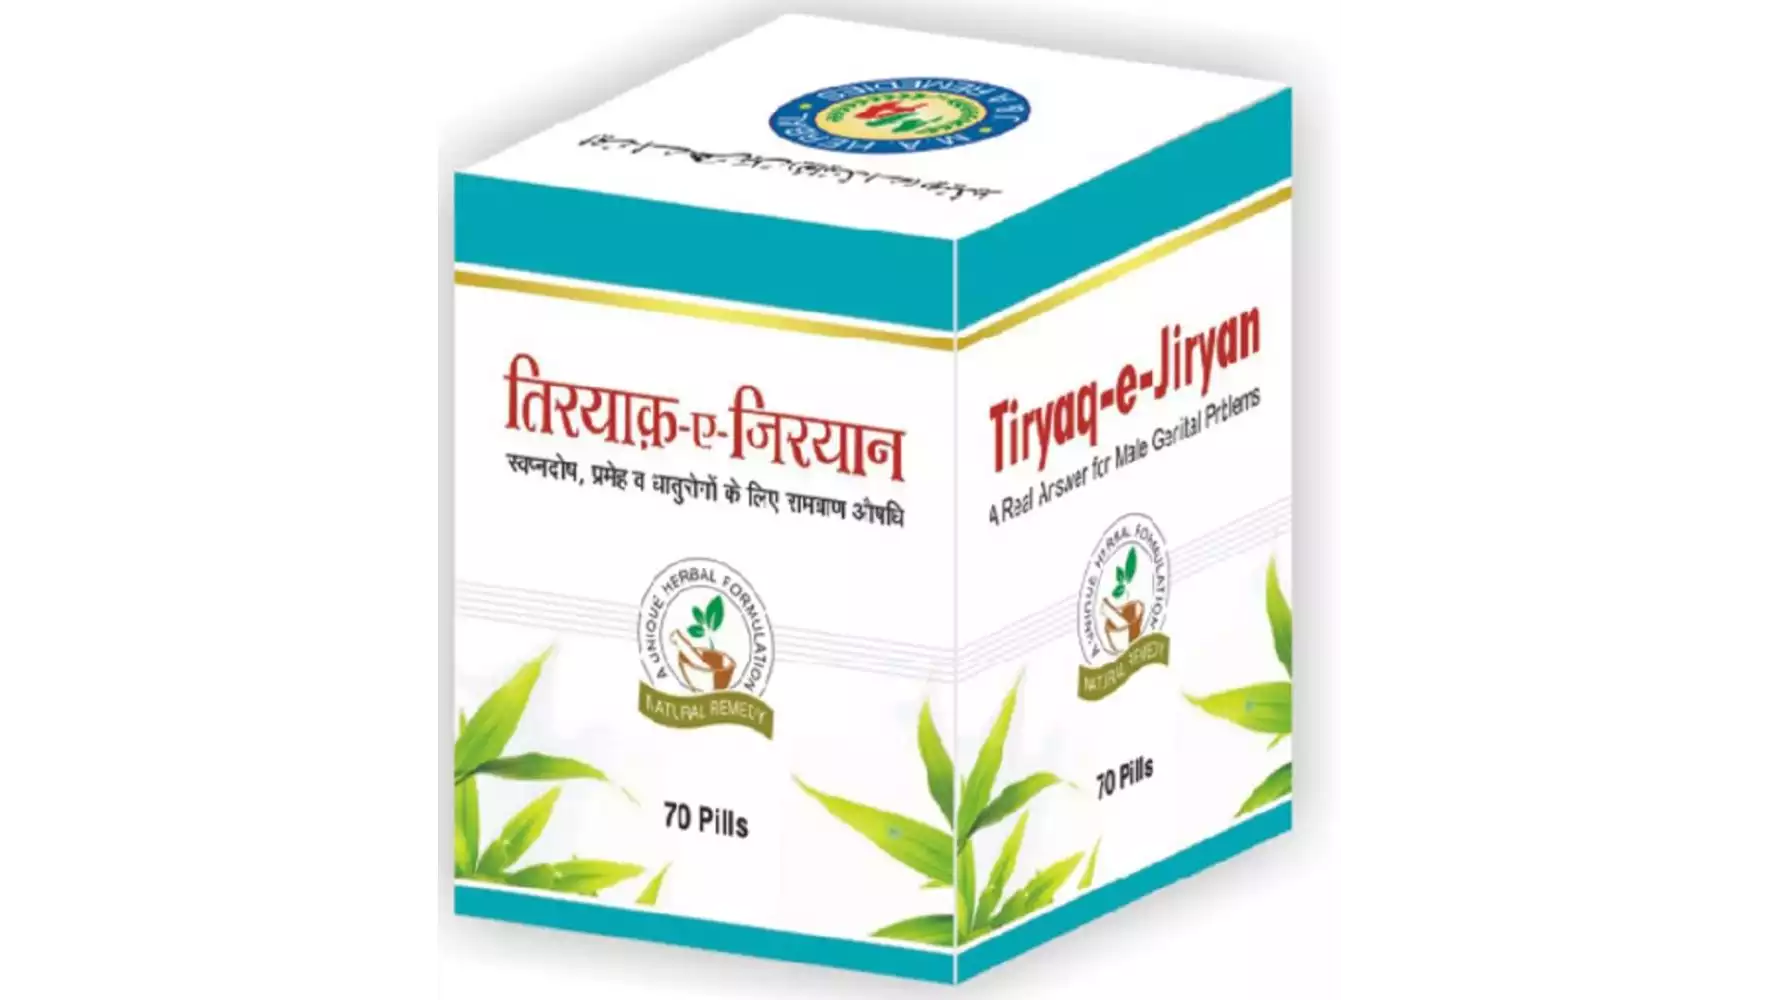 M A Herbal Tiryaq-E-Jiryan Pills (70Pills, Pack of 2)